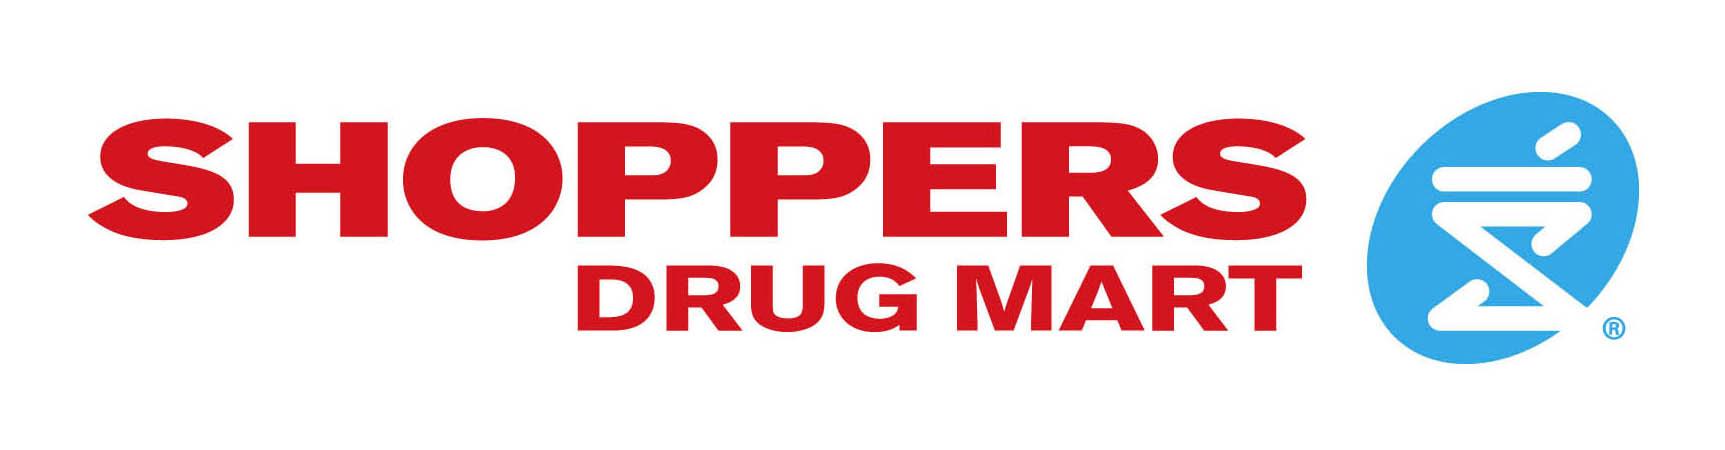 Shoppers Drug Mart Brand Logo